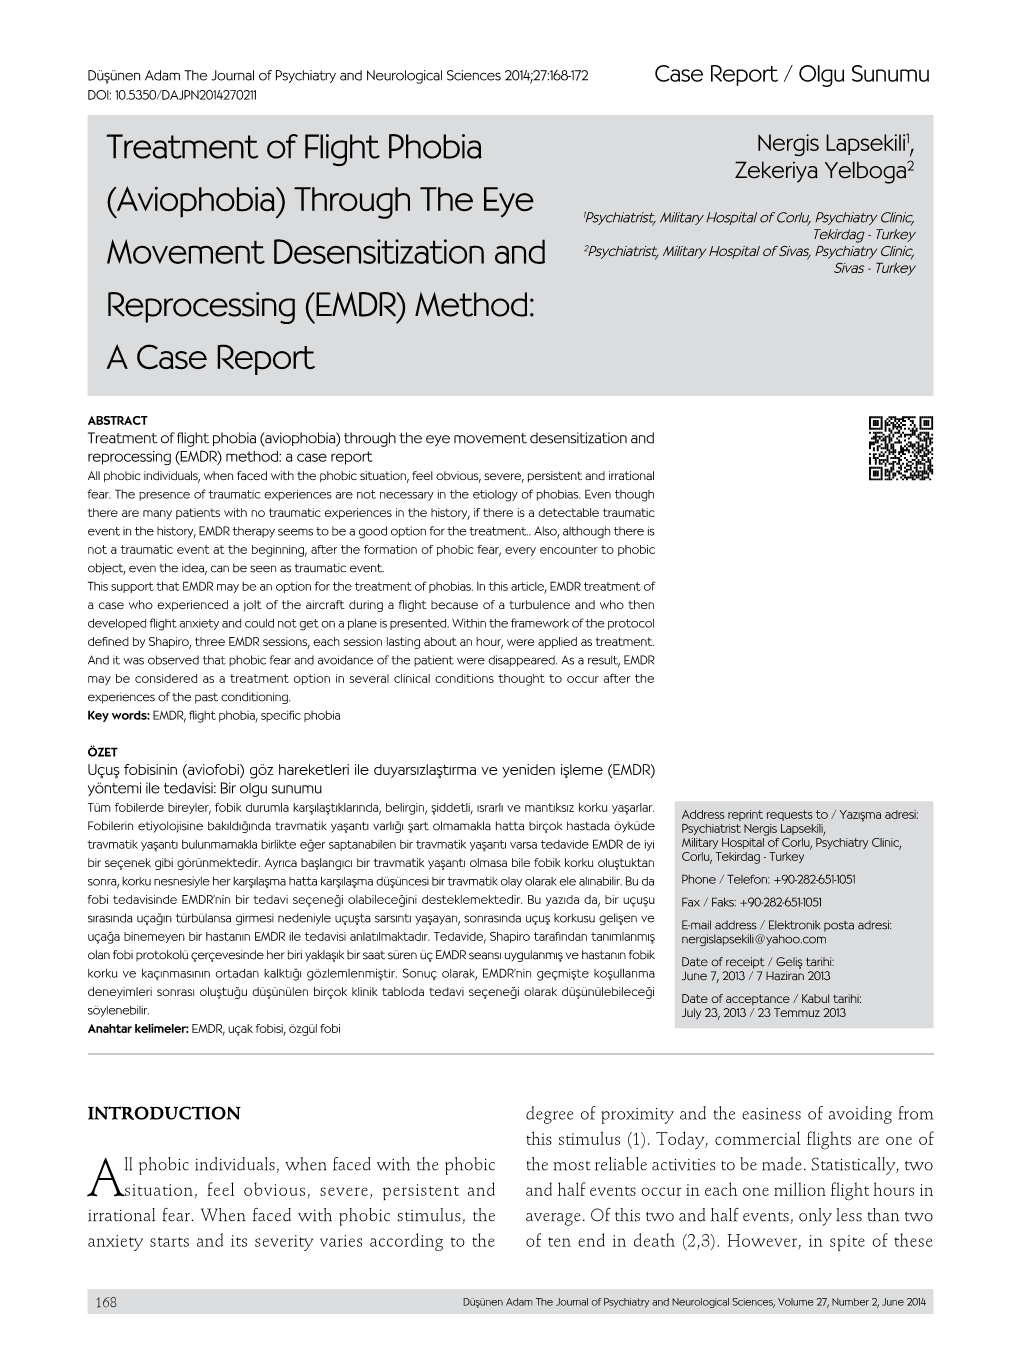 Treatment of Flight Phobia (Aviophobia) Through the Eye